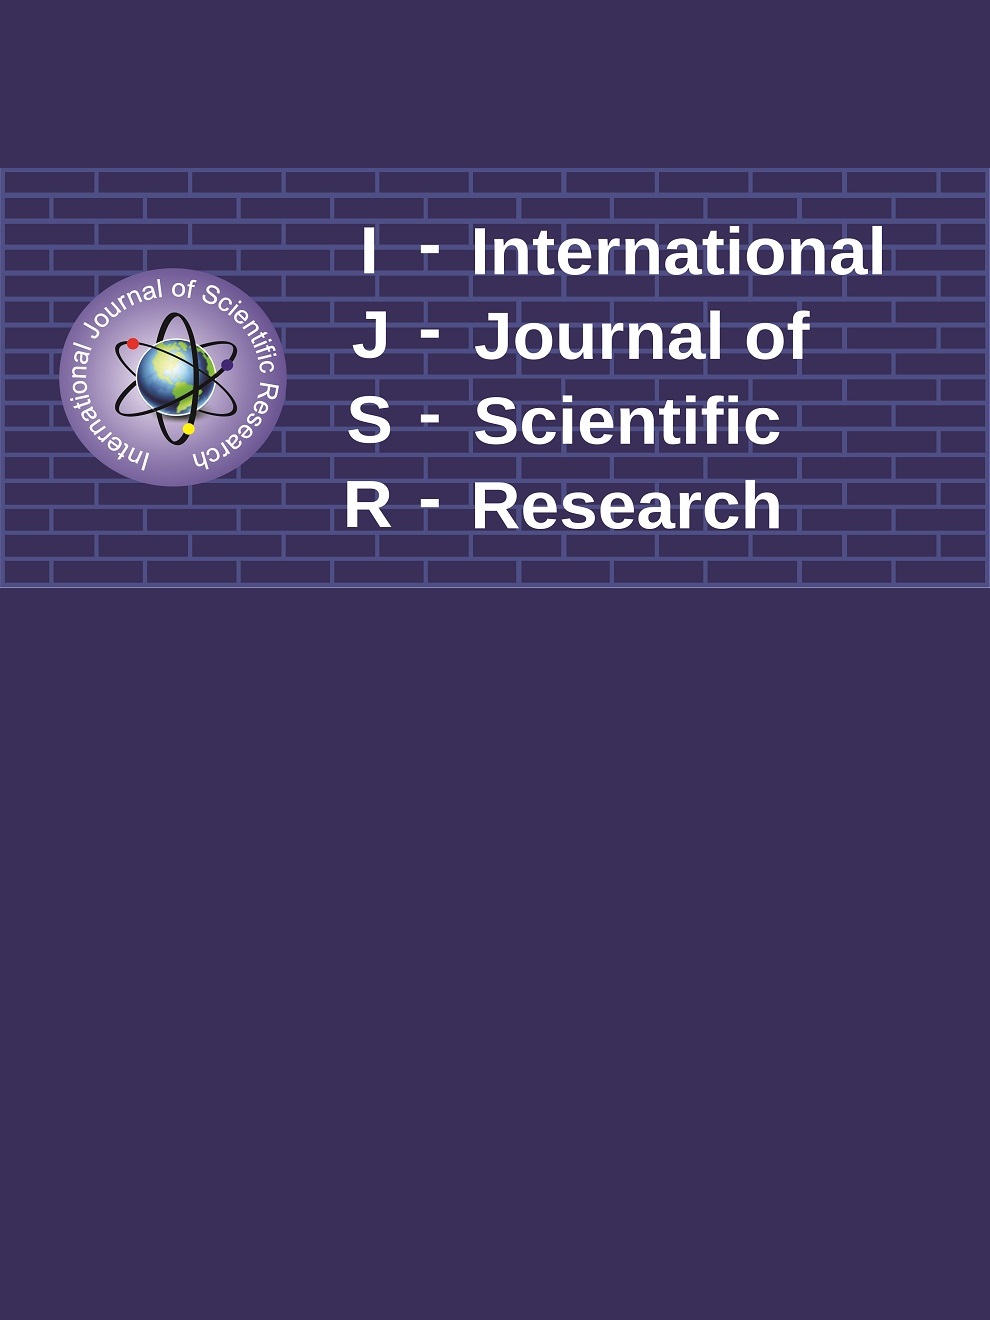 International Journal of Scientific Research